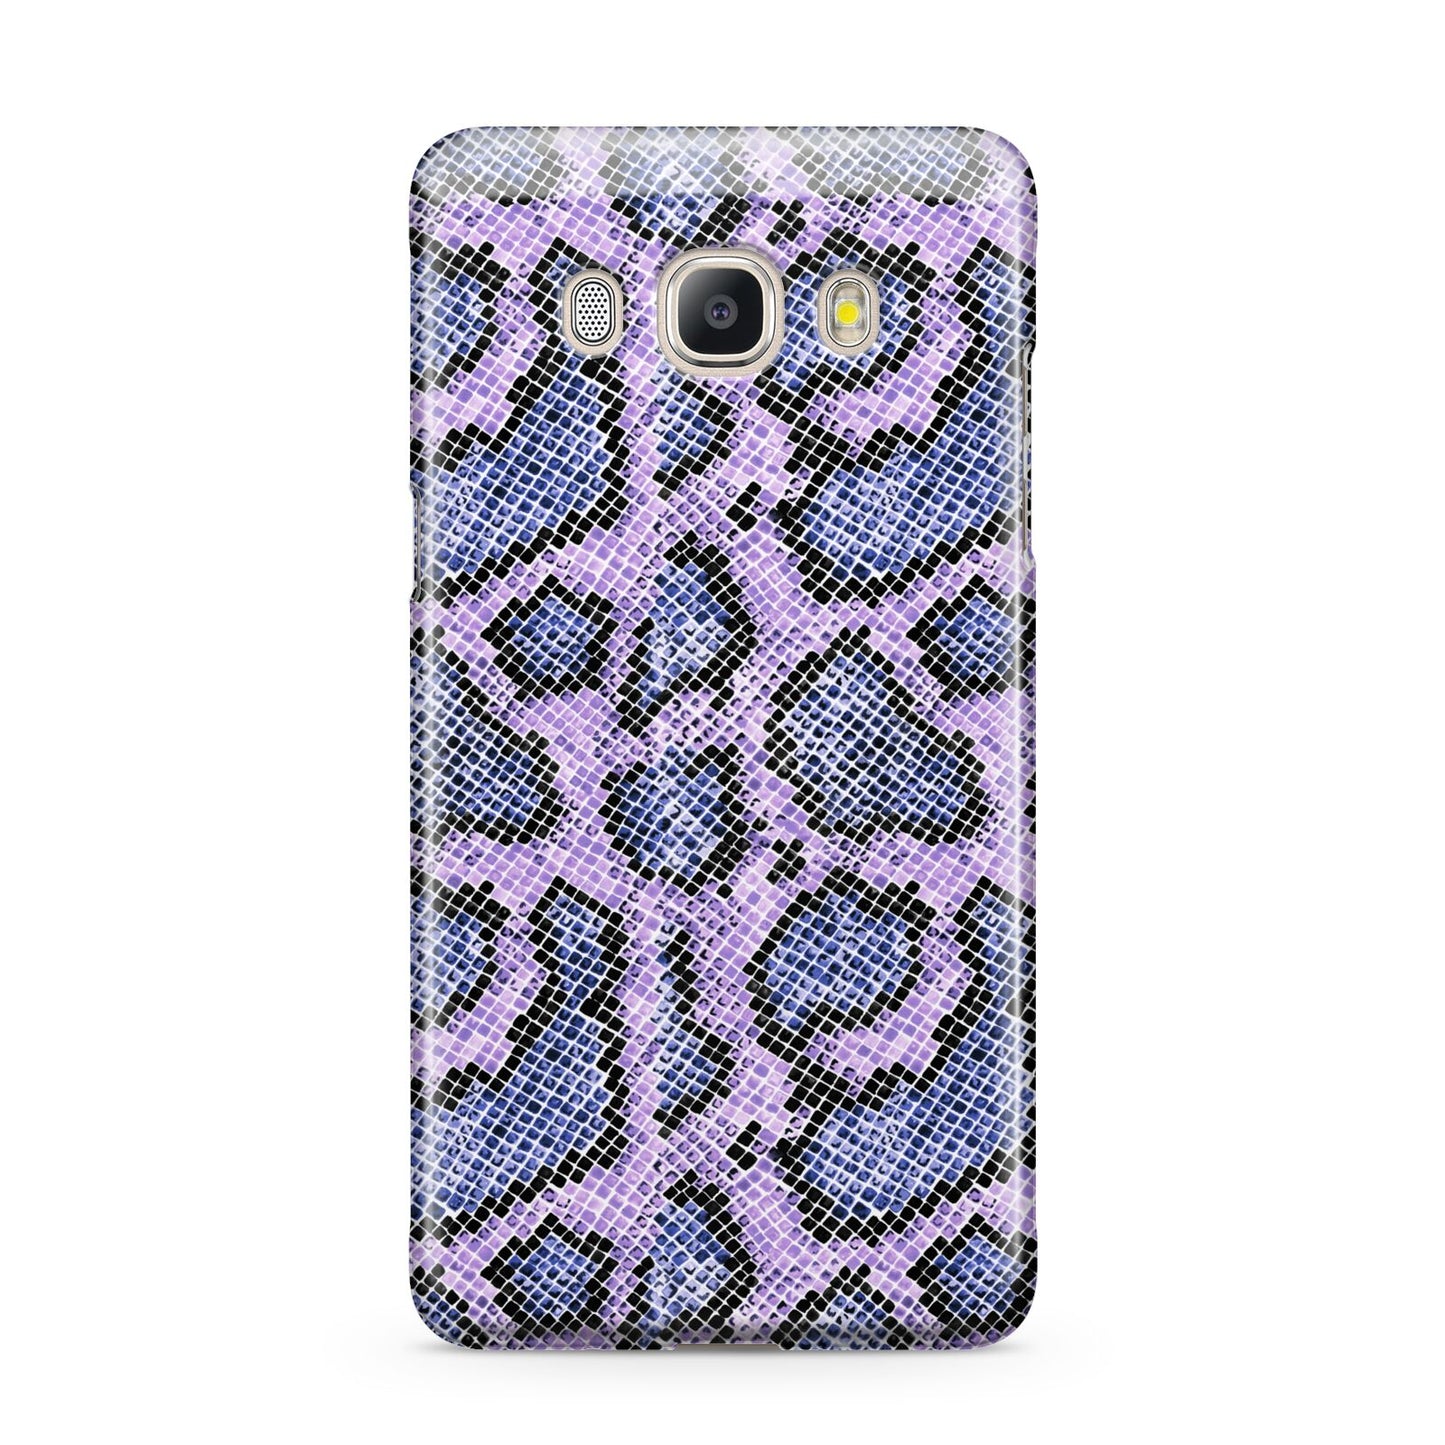 Purple And Blue Snakeskin Samsung Galaxy J5 2016 Case